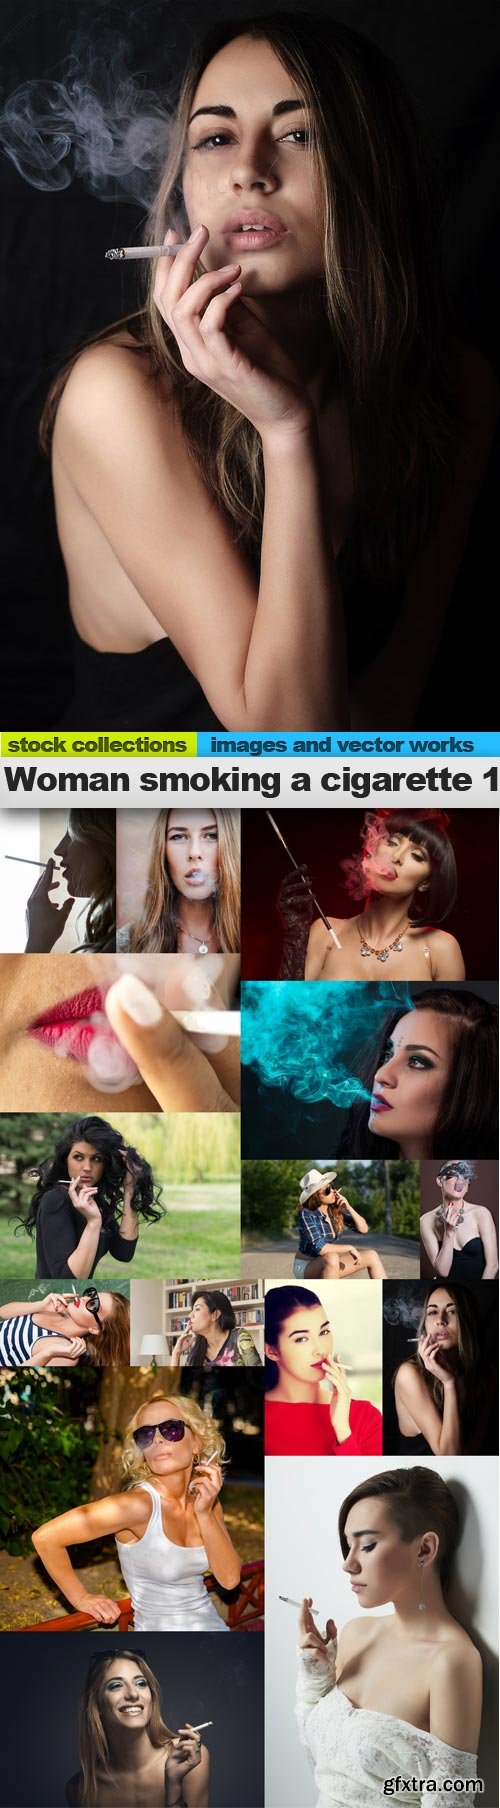 Woman smoking a cigarette 1, 15 x UHQ JPEG